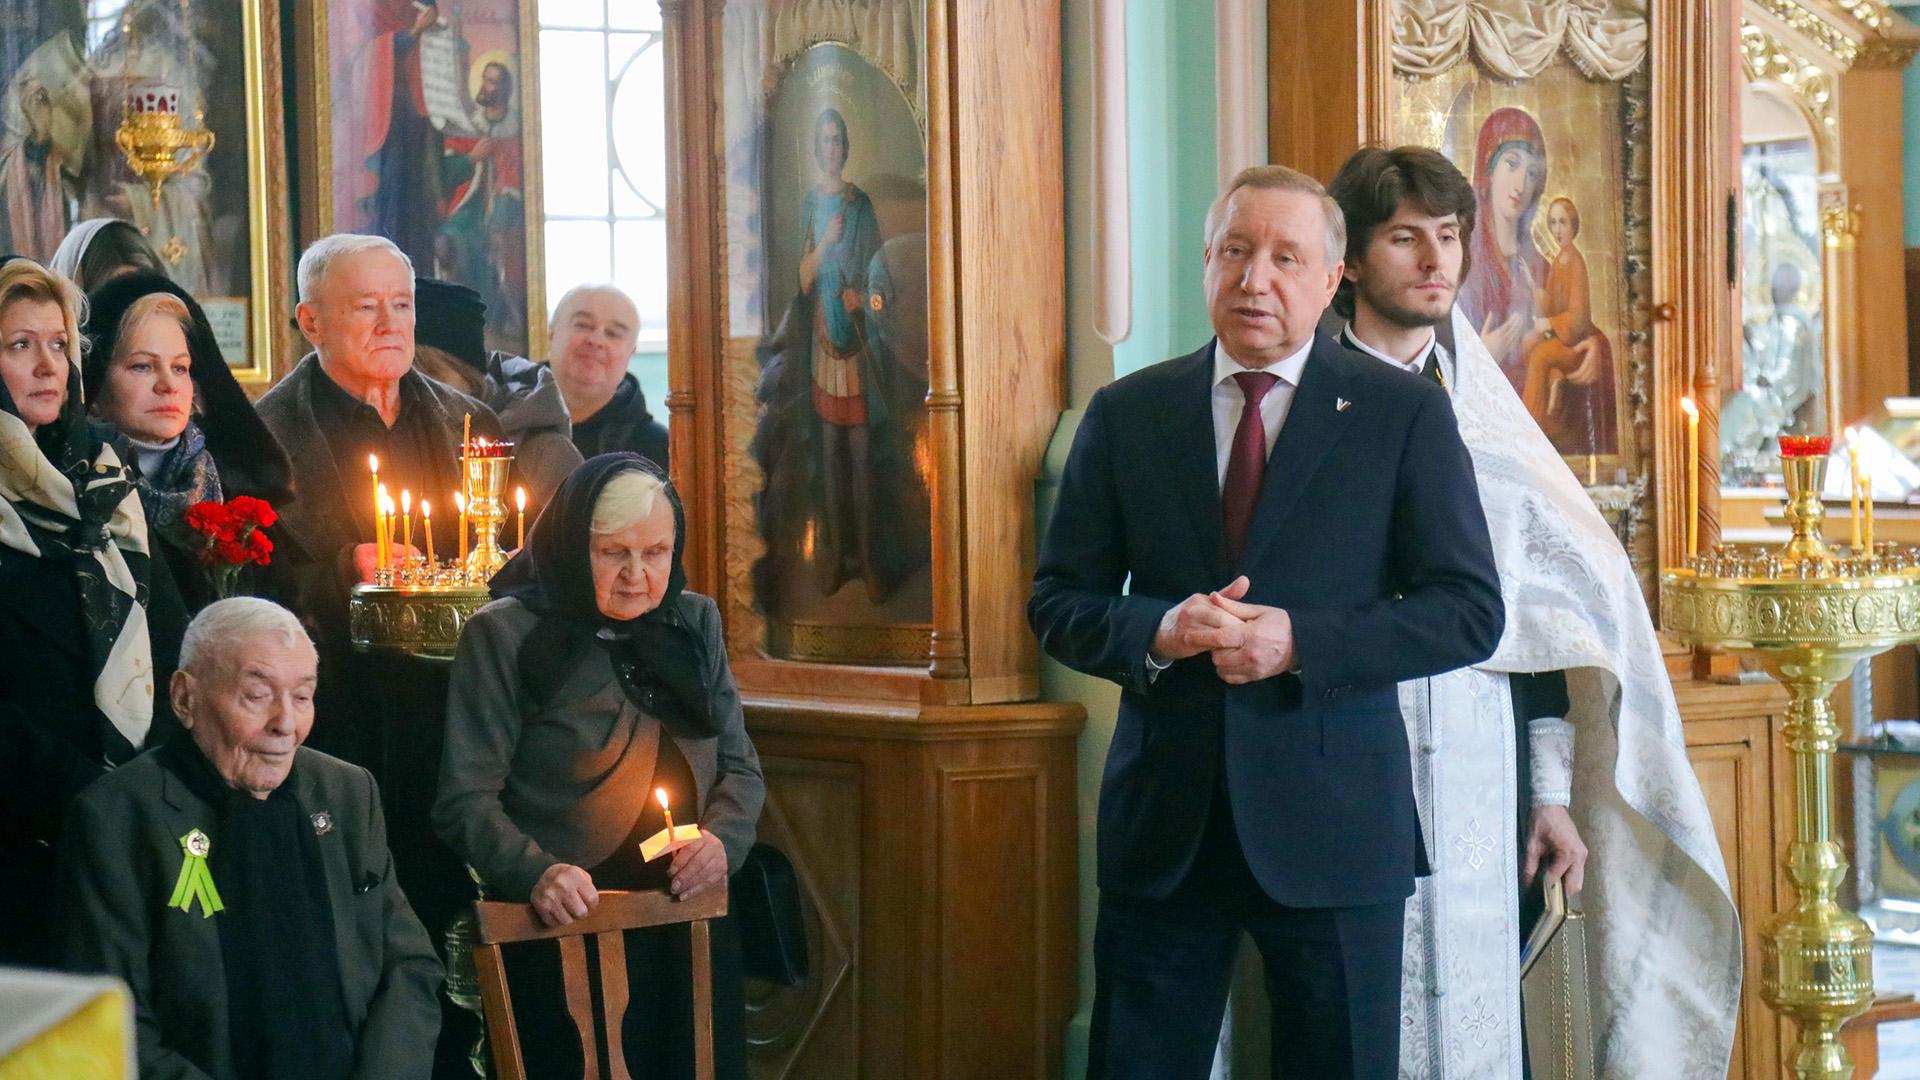 Фото: пресс-служба губернатора Санкт-Петербурга